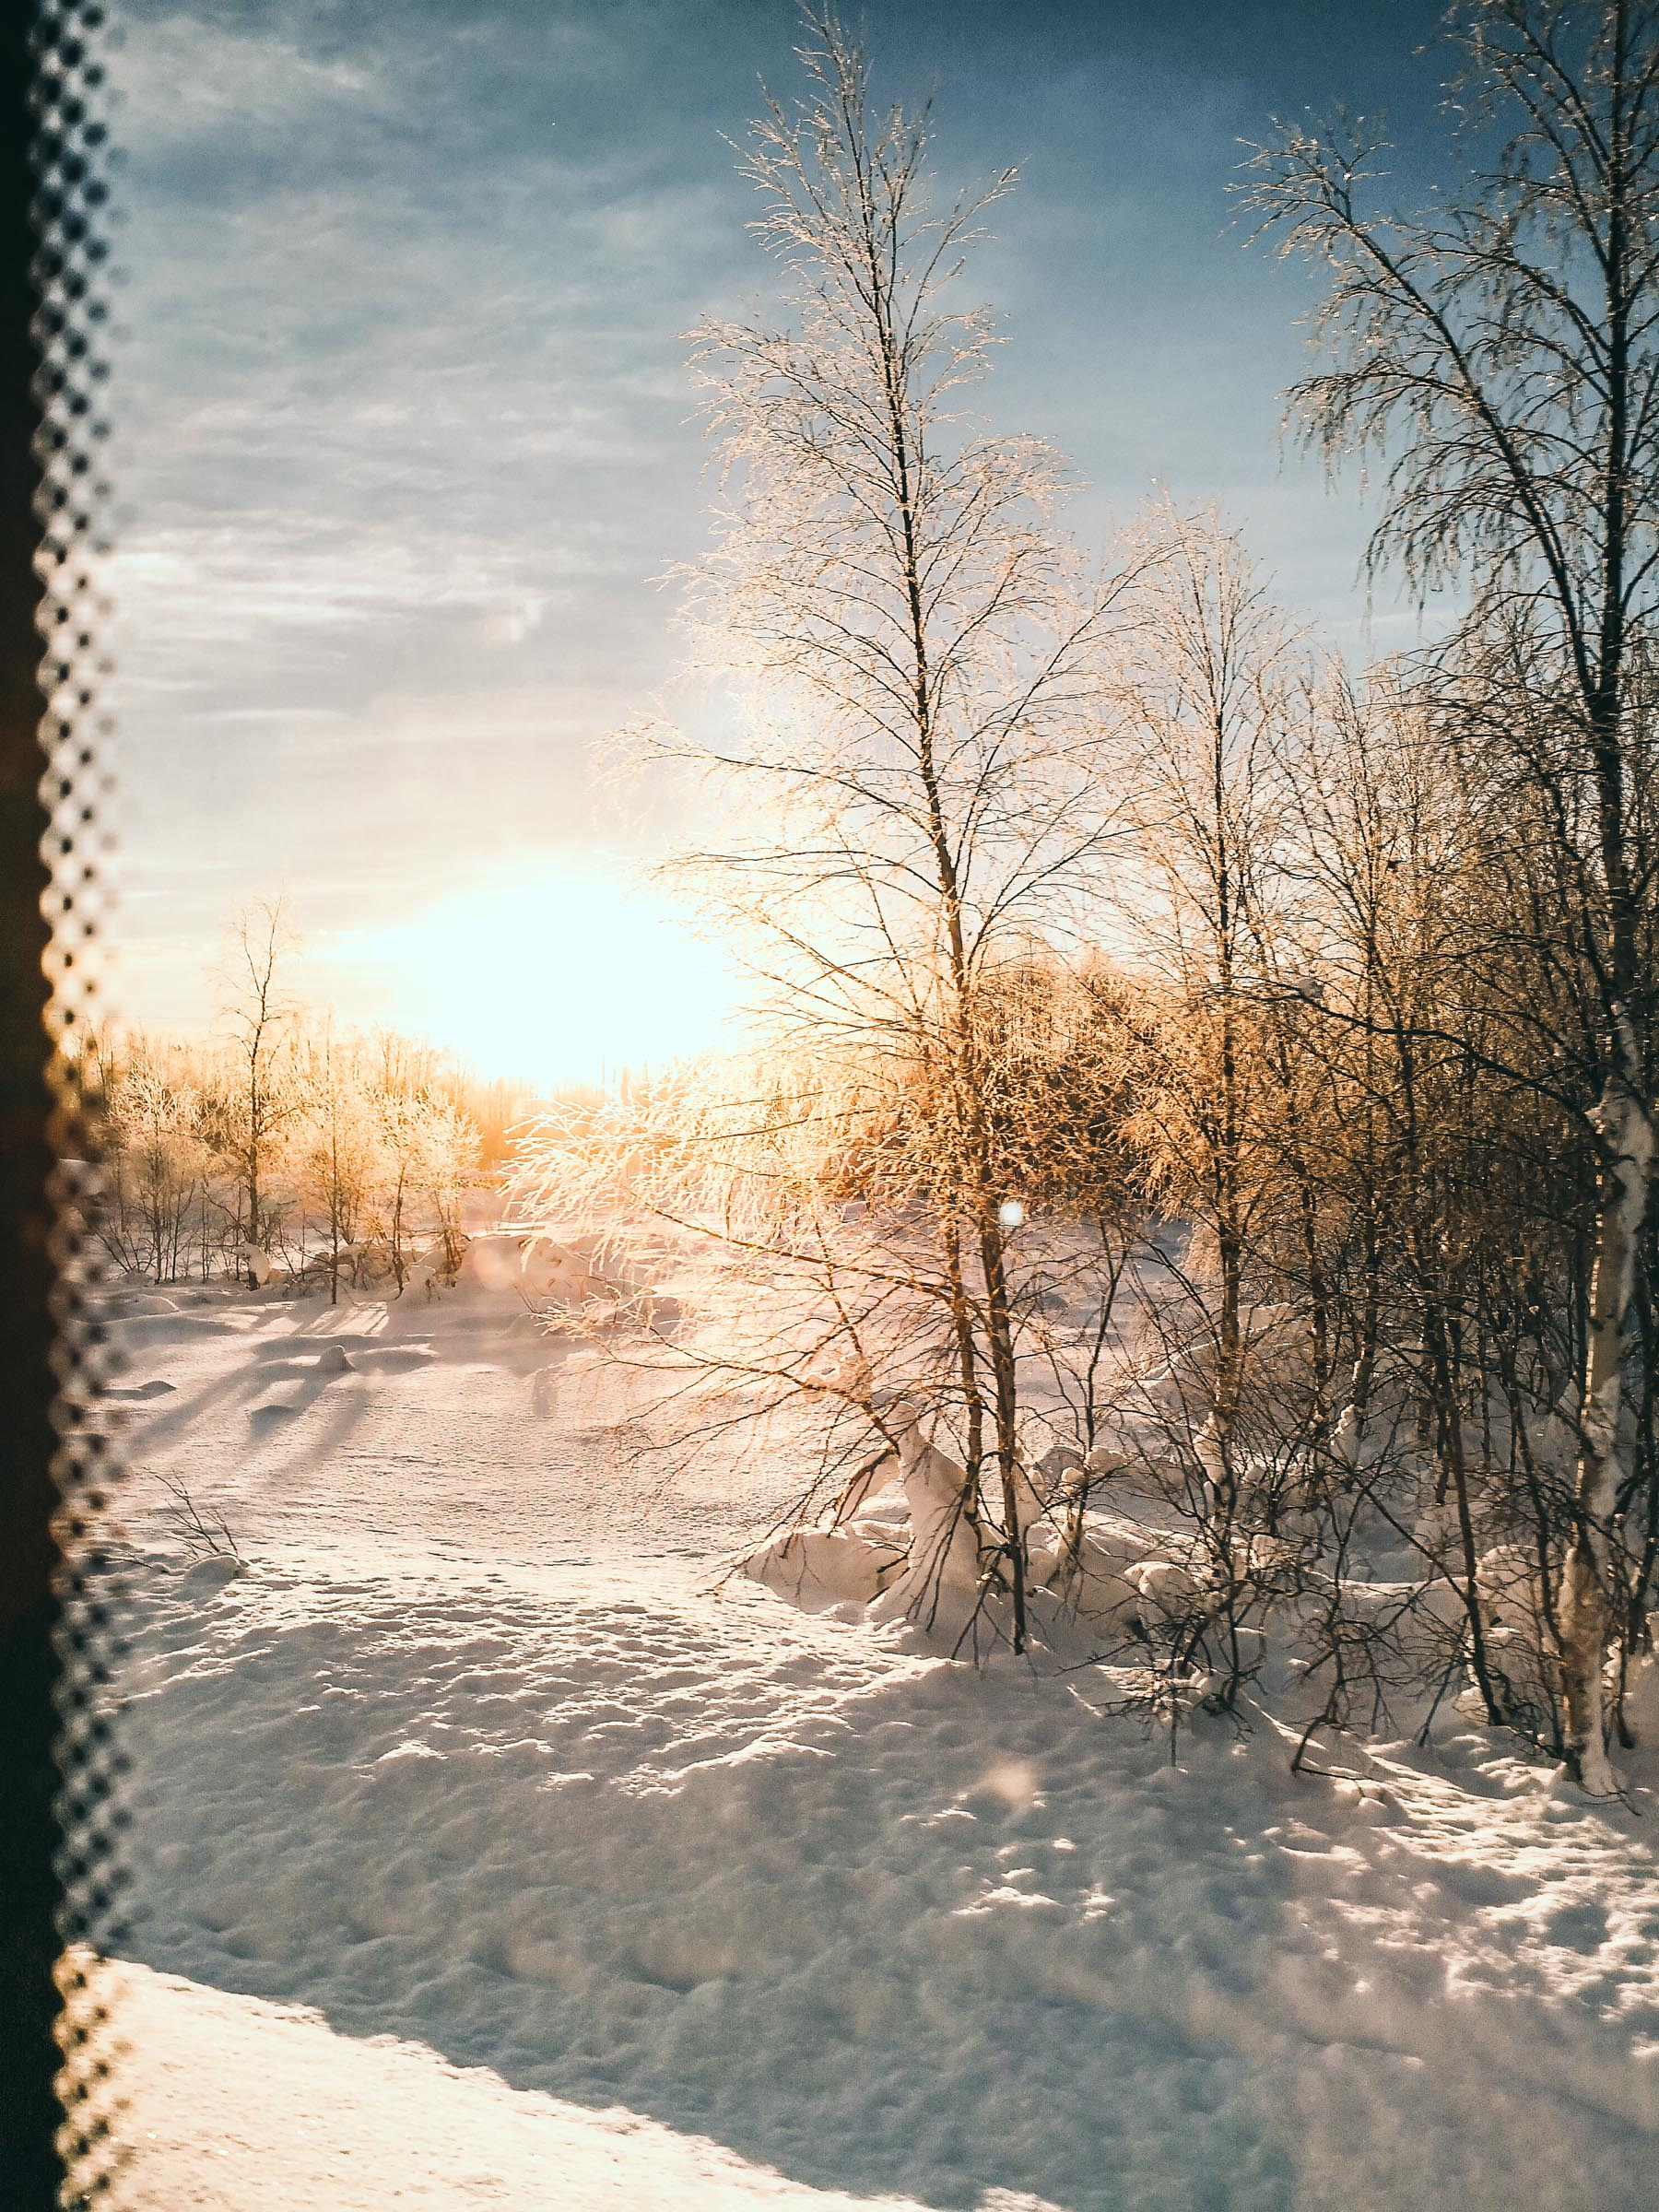 Tommeezjerry-Lifestyleblog-Fashionblog-Maennermodeblog-Maennerblog-Modeblog-Huawei-Mate-10-Pro-Travel-Photography-Finland-Winter-Winterwonderland-Nature-Snow-Ice